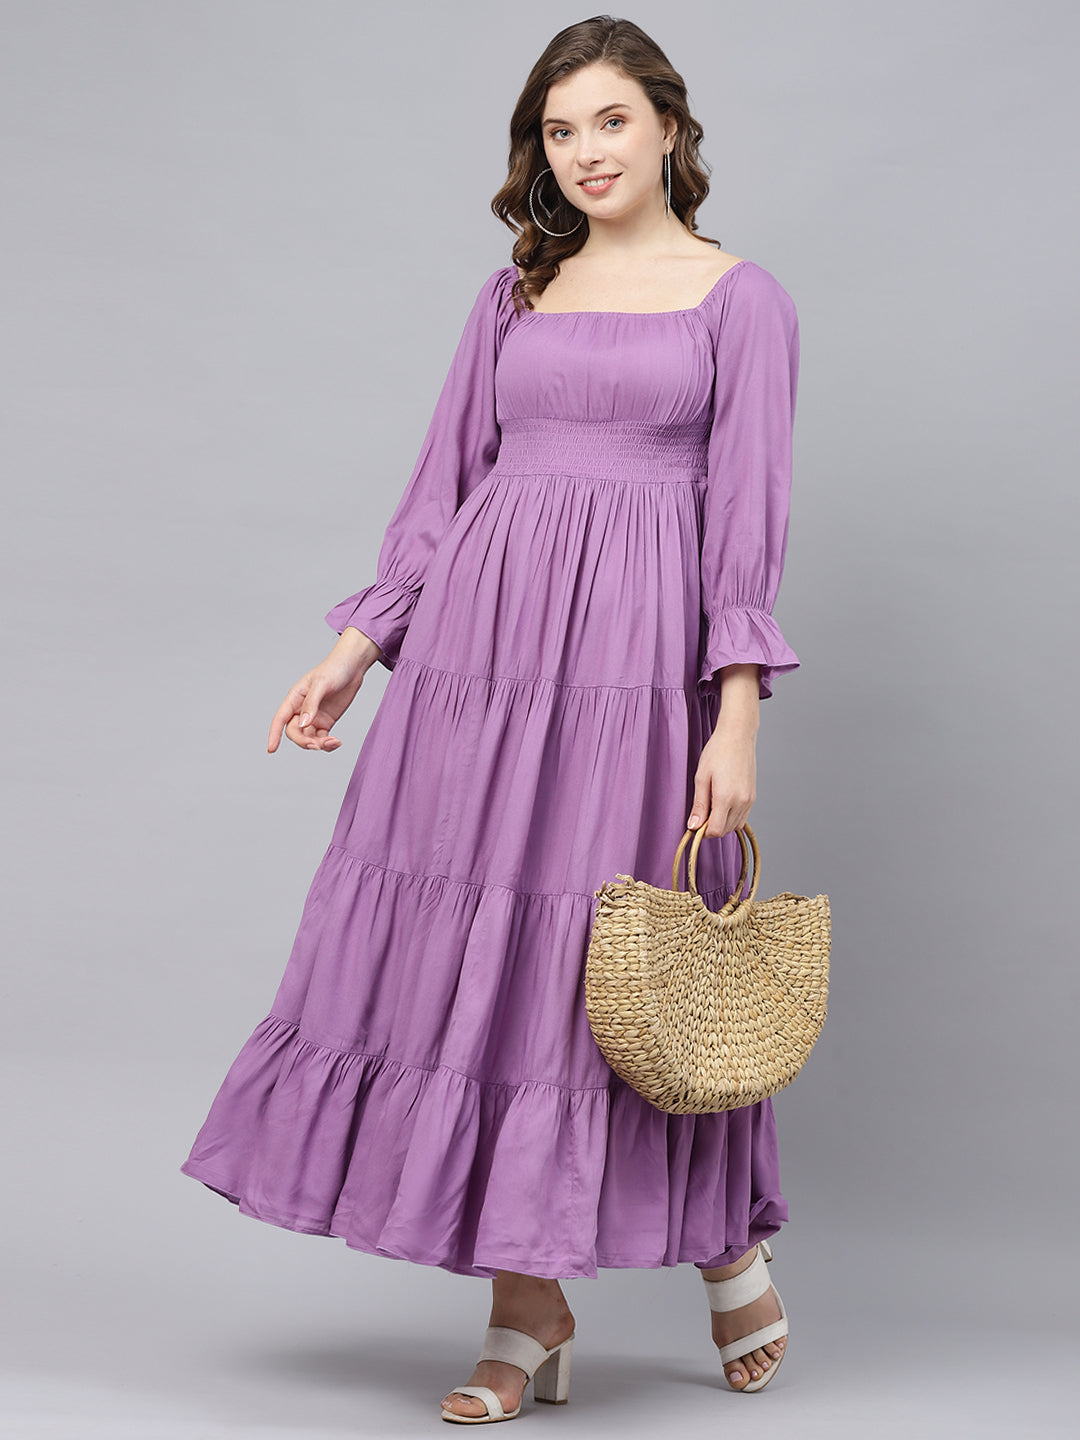 Women's Plus Size Lavender Square Neck Solid Flared Maxi Dress